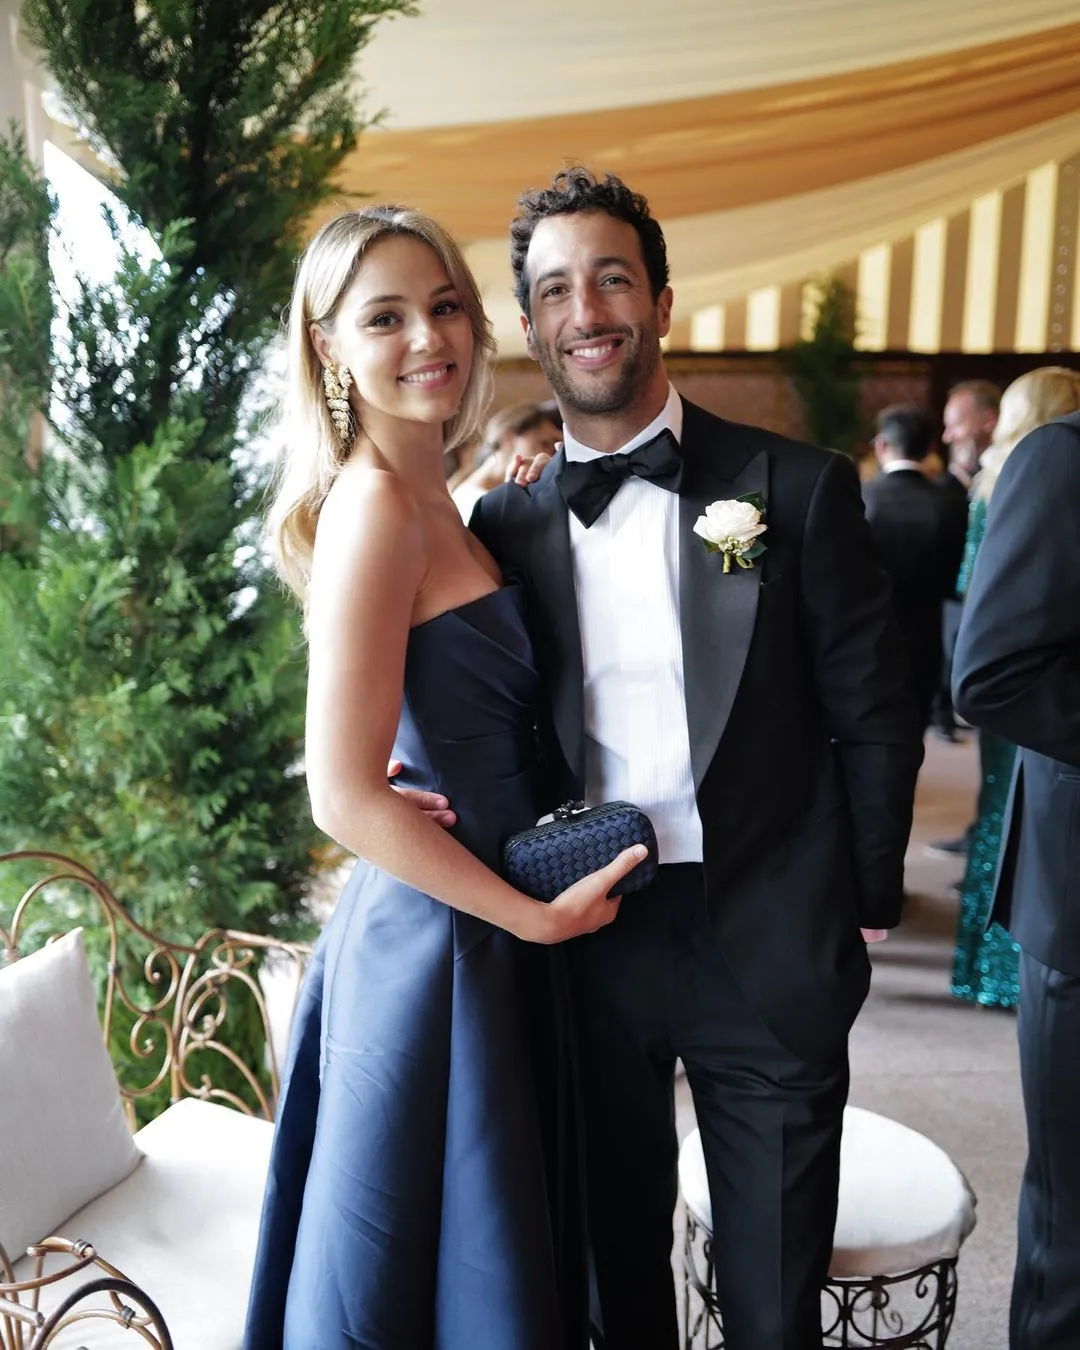 Who Is Daniel Ricciardo Girlfriend?